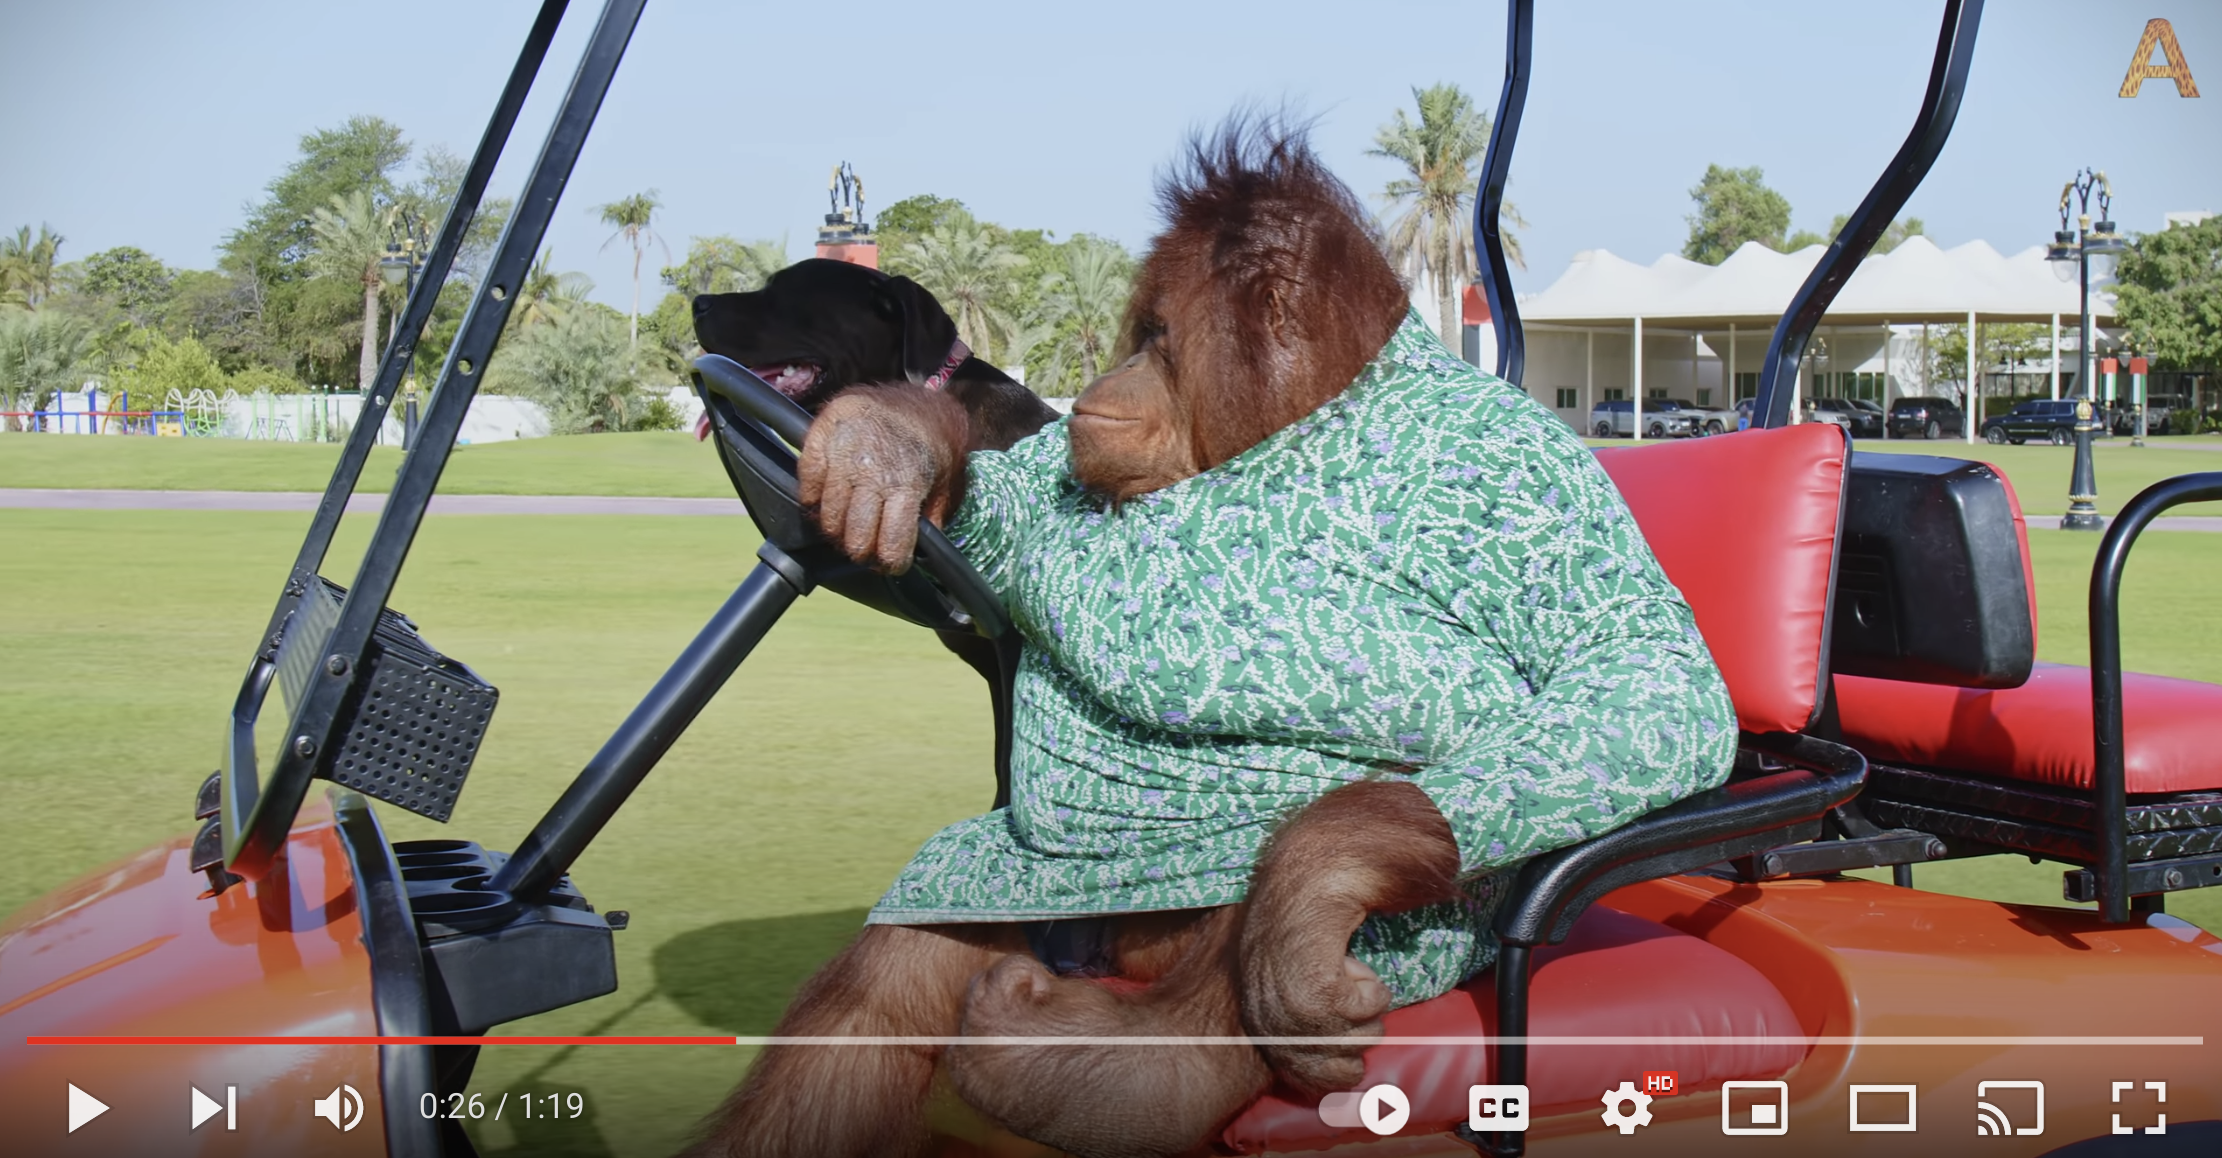 Orangutan Driving a Golf Cart - You've Got to See This